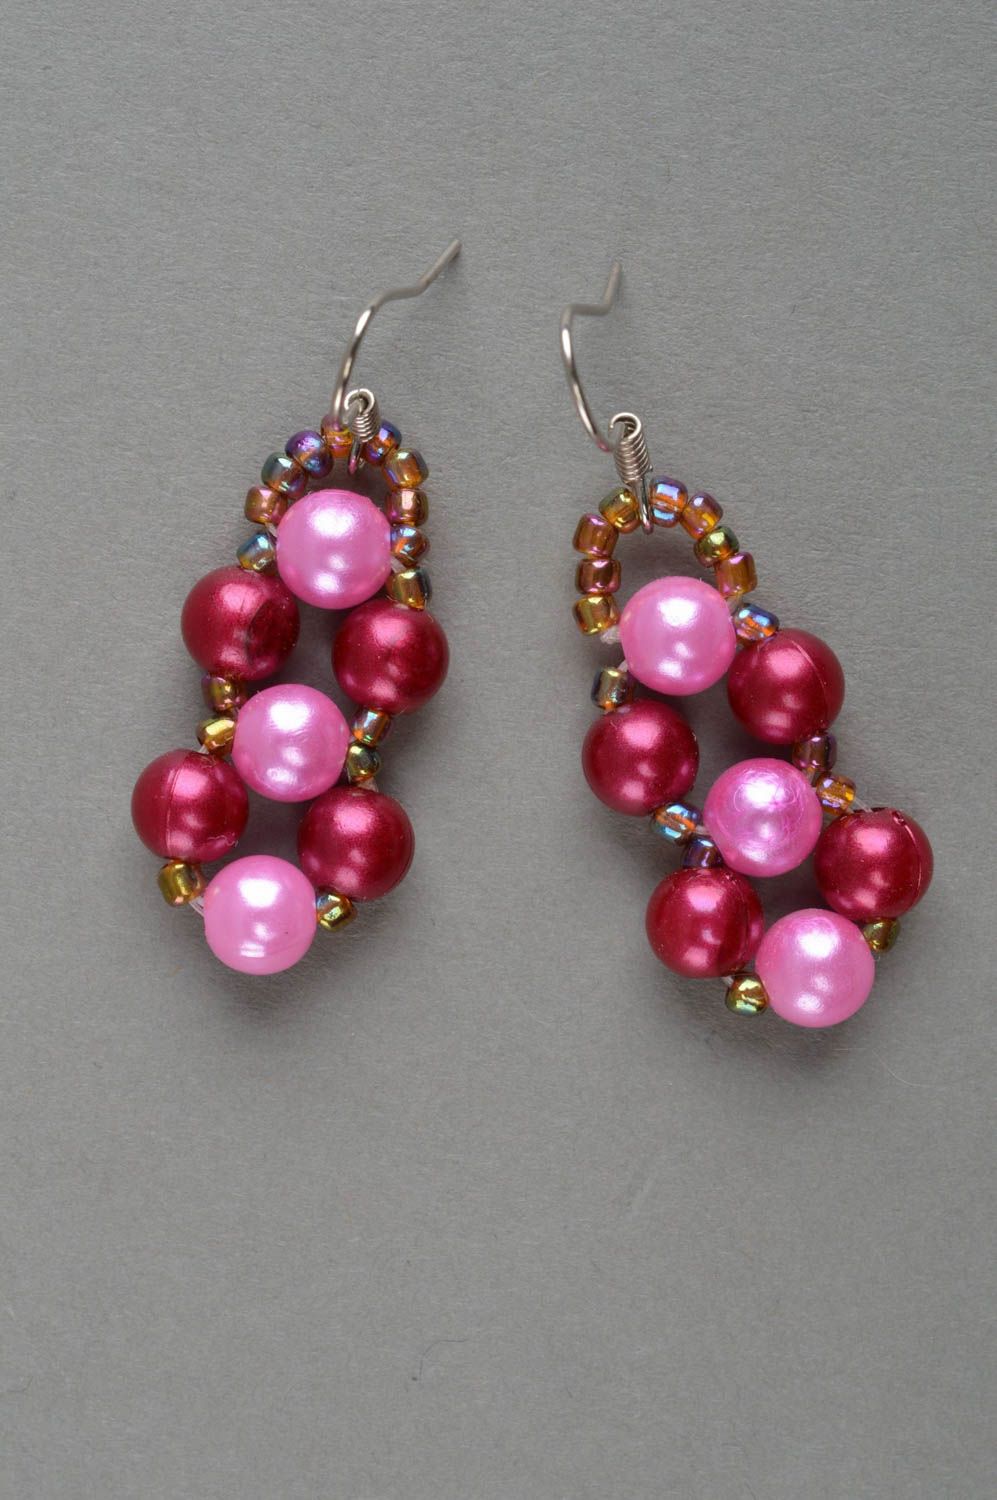 Boucles d'oreilles en perles fantaisie faites main pendantes rose-framboise photo 2